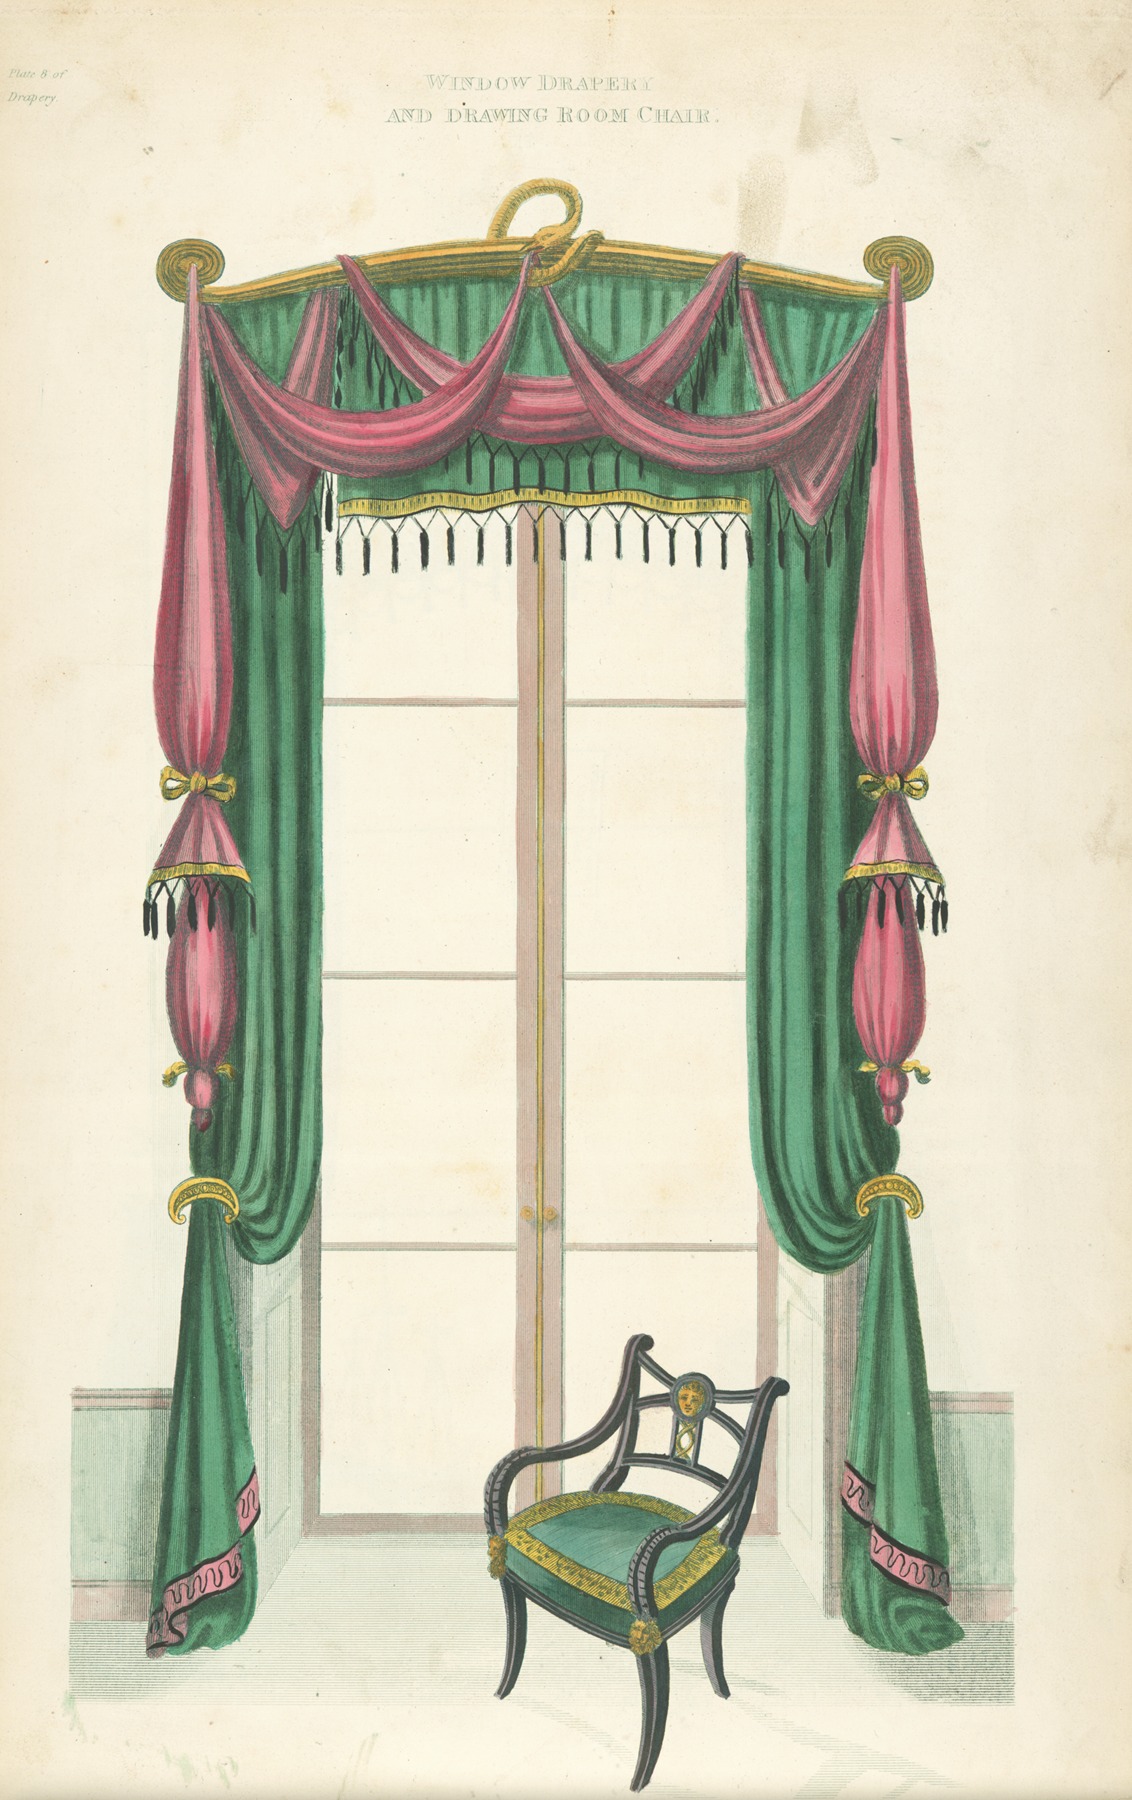 Thomas Sheraton - Window drapery and drawing room chair.